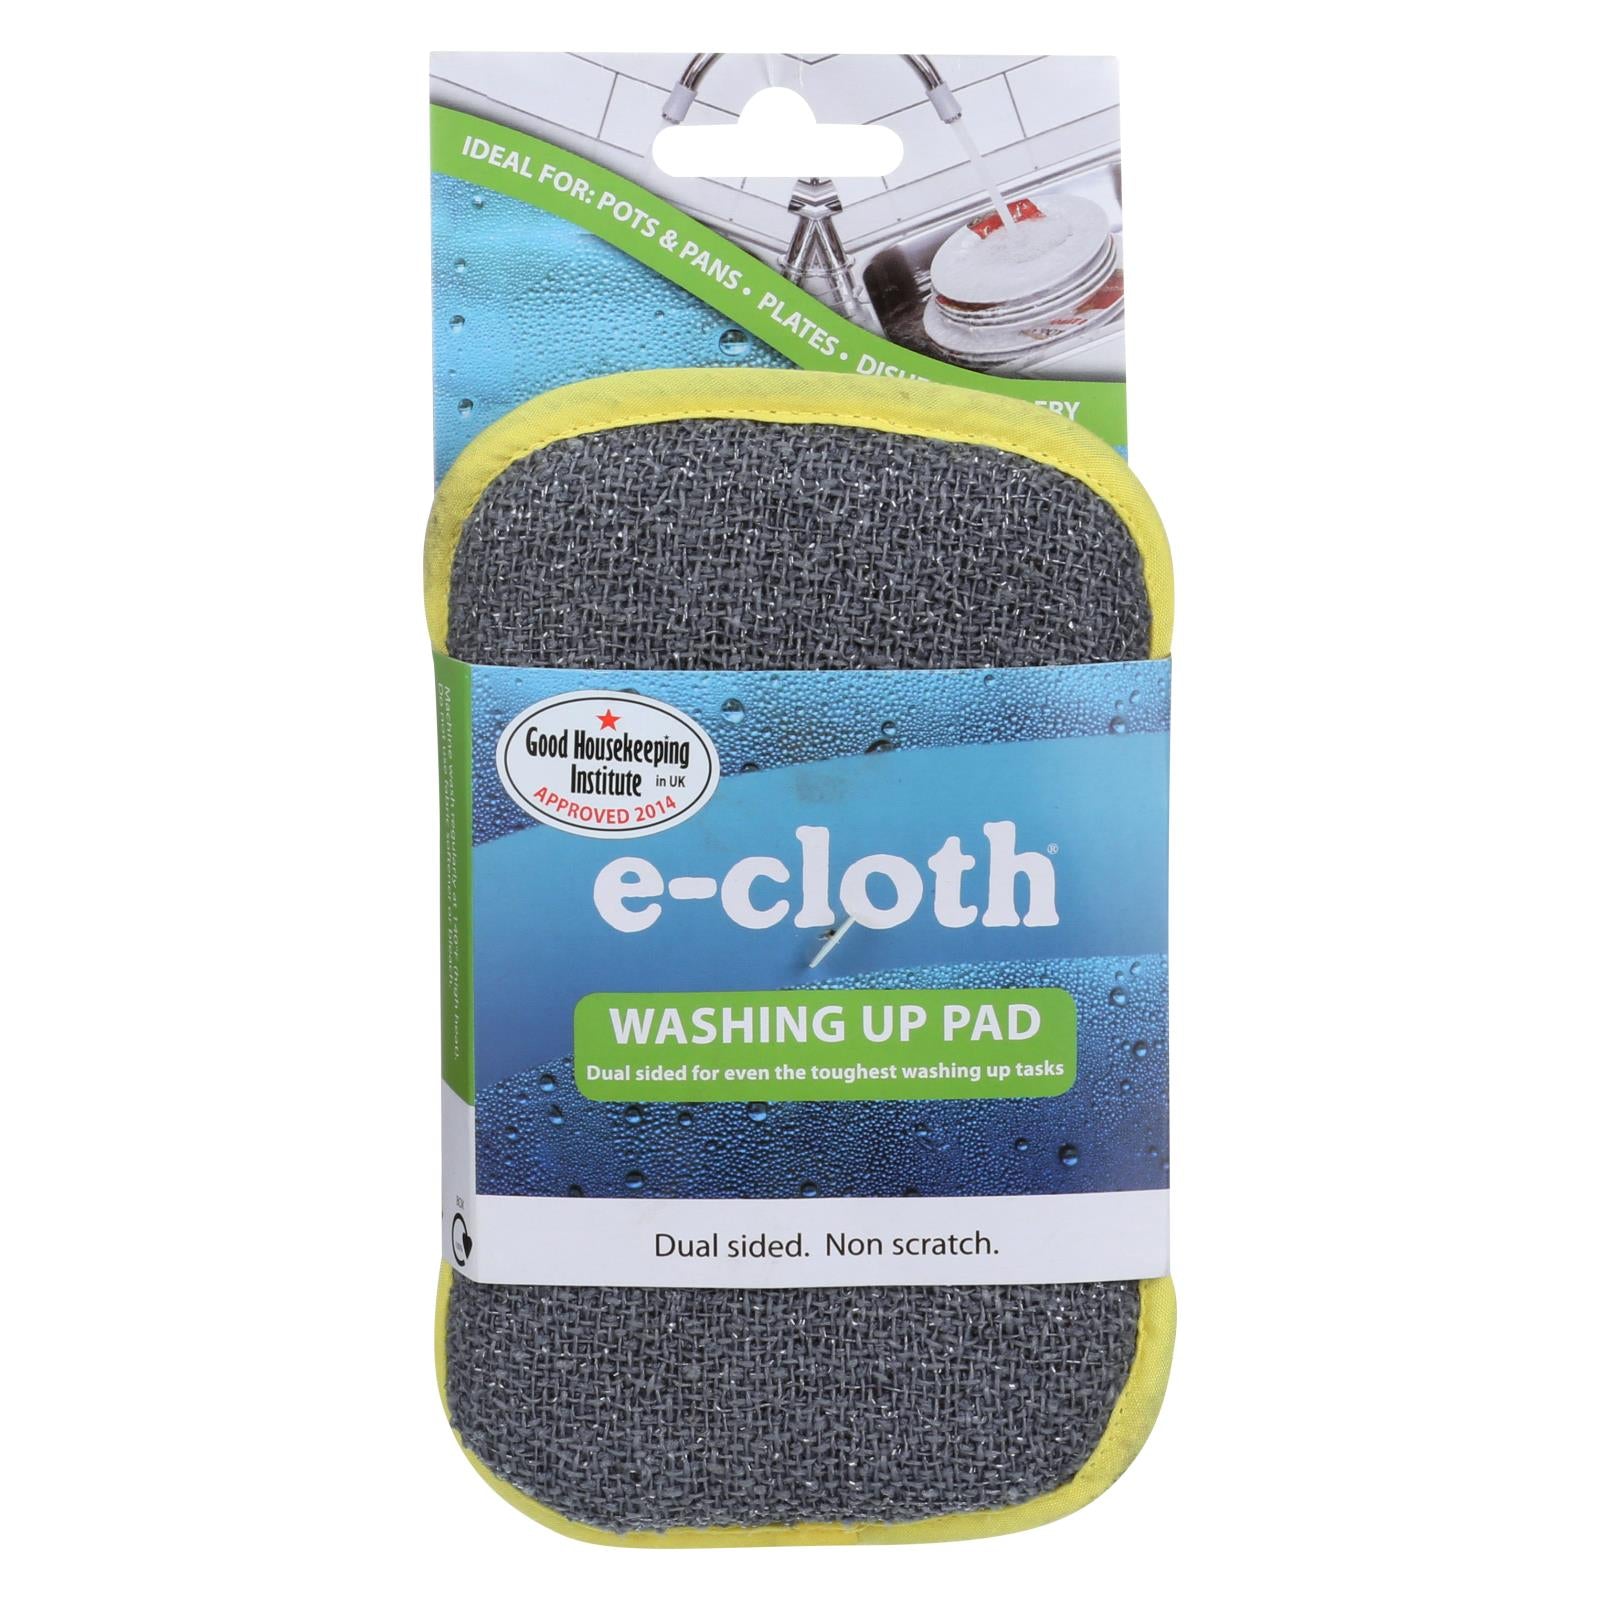 E-cloth Washing Up Pad - Whole Green Foods